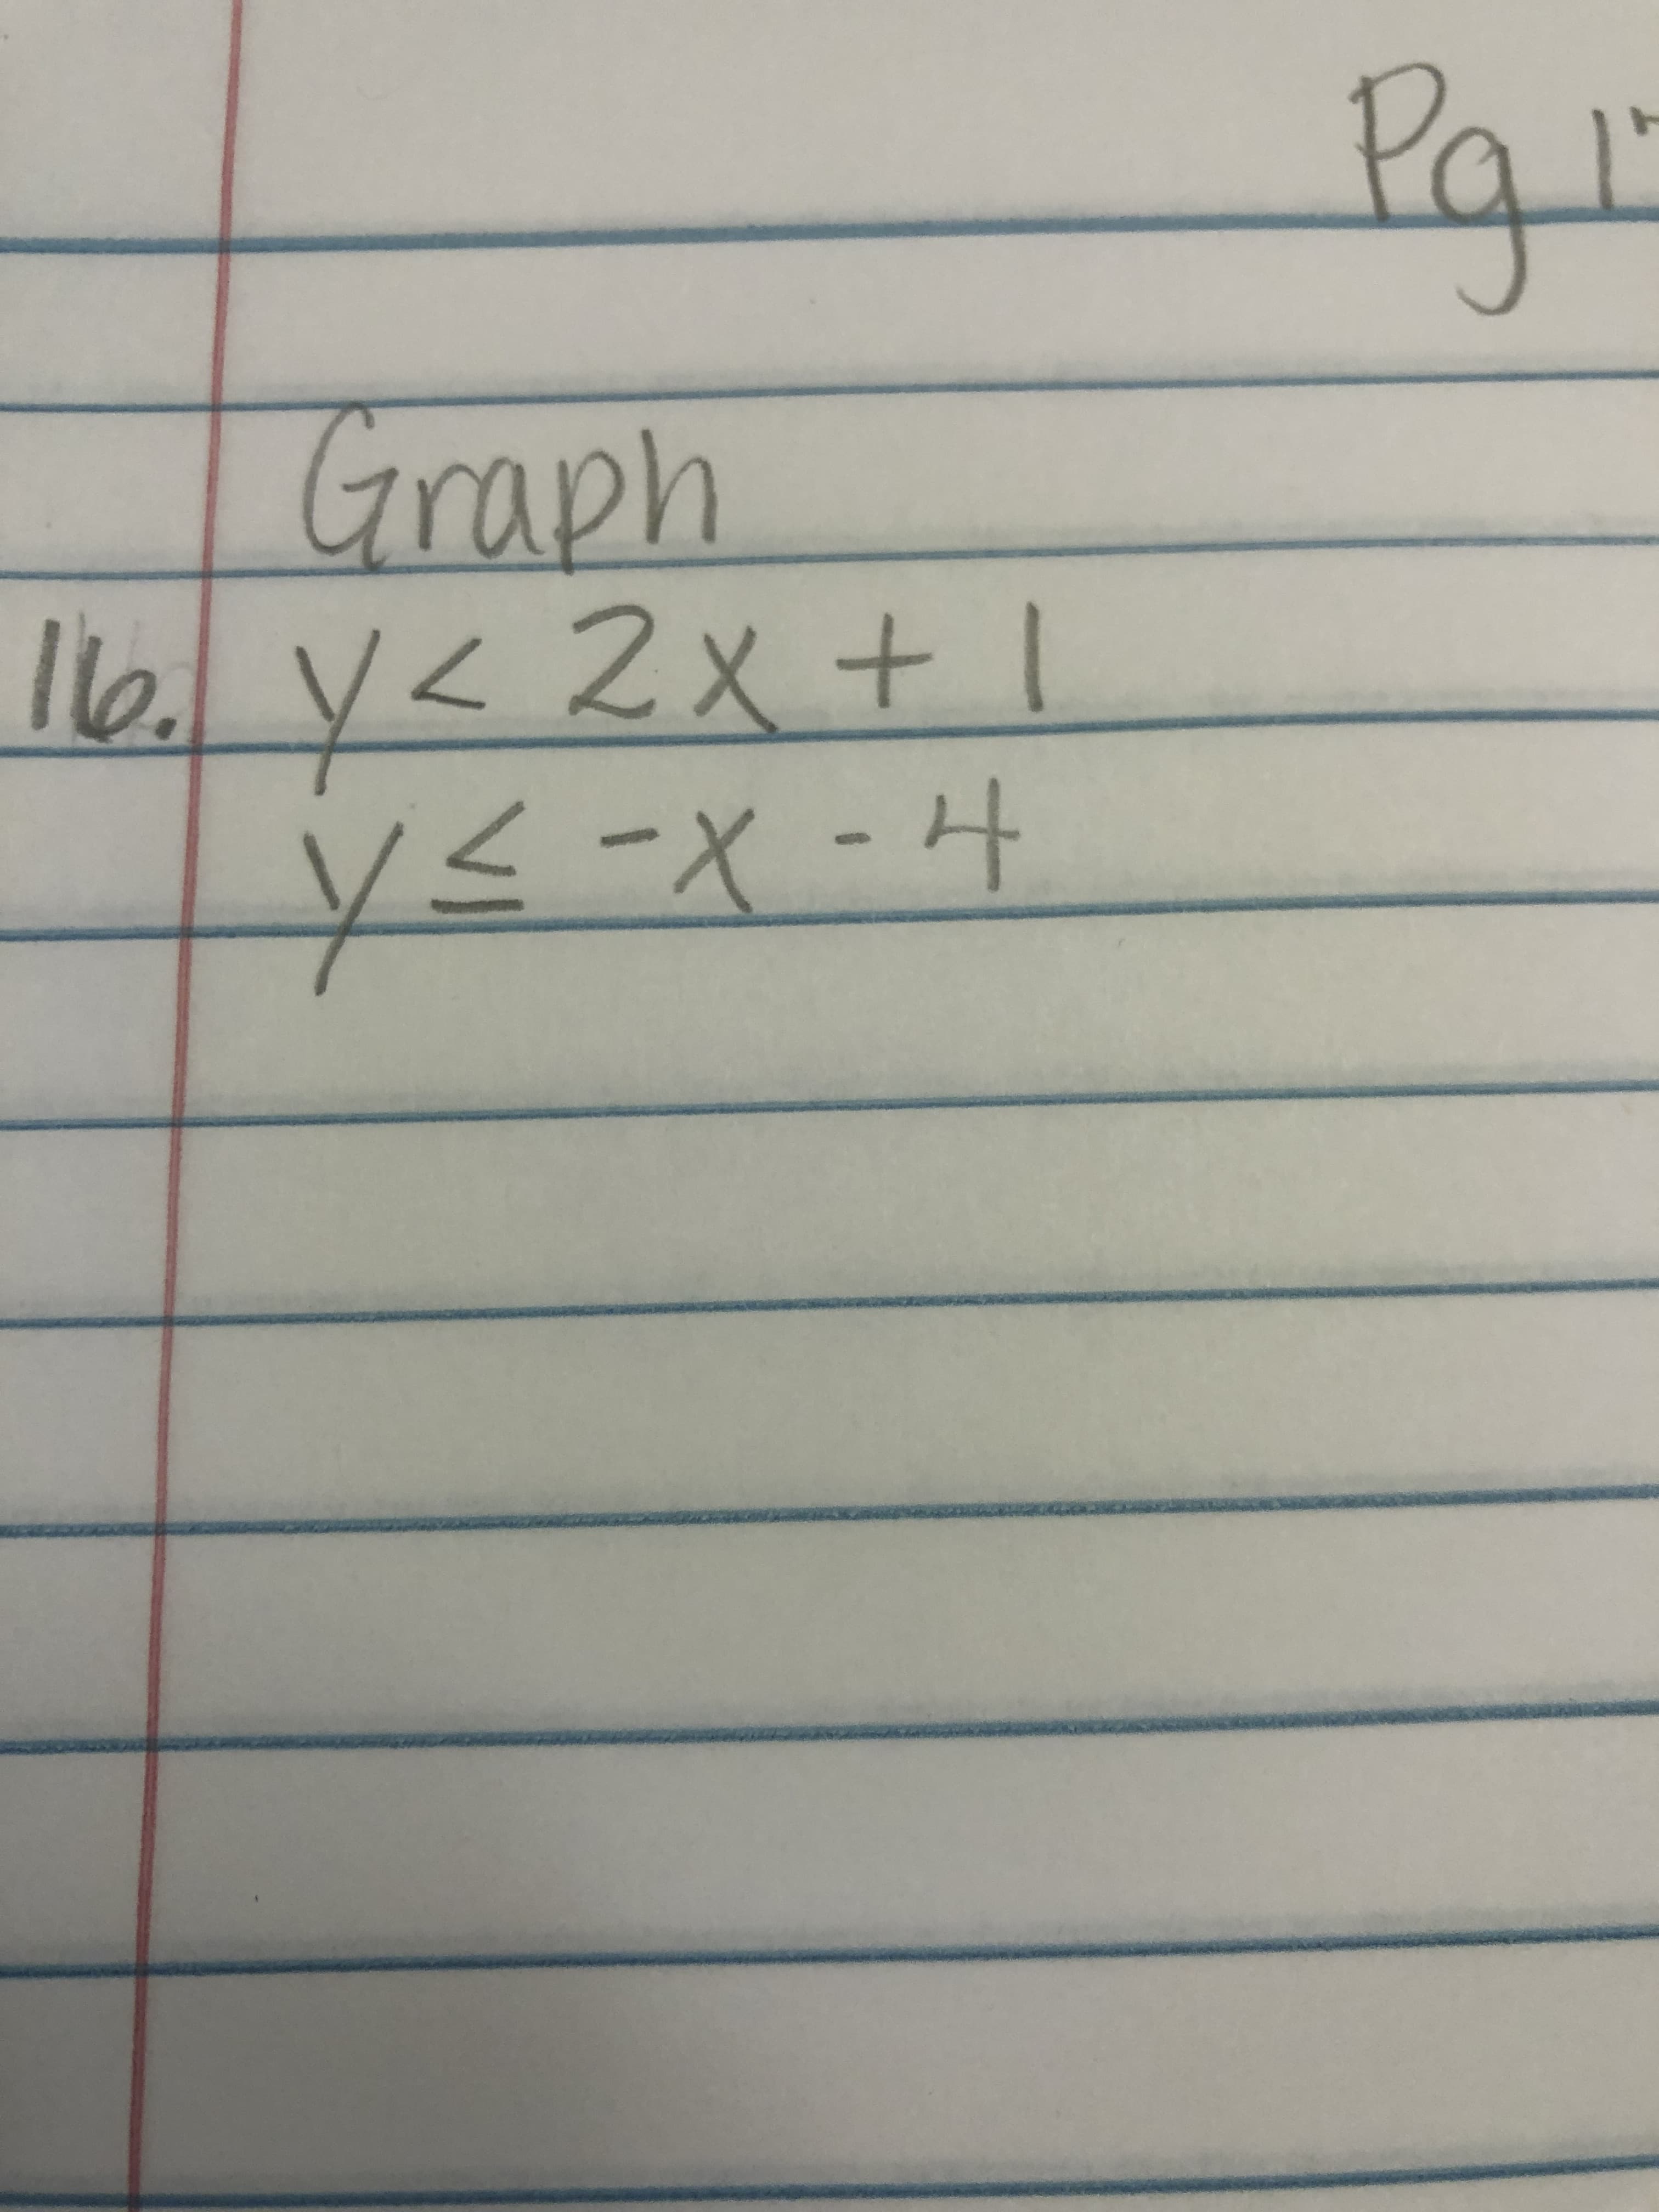 Graph
y<2x+1
く-X-4
